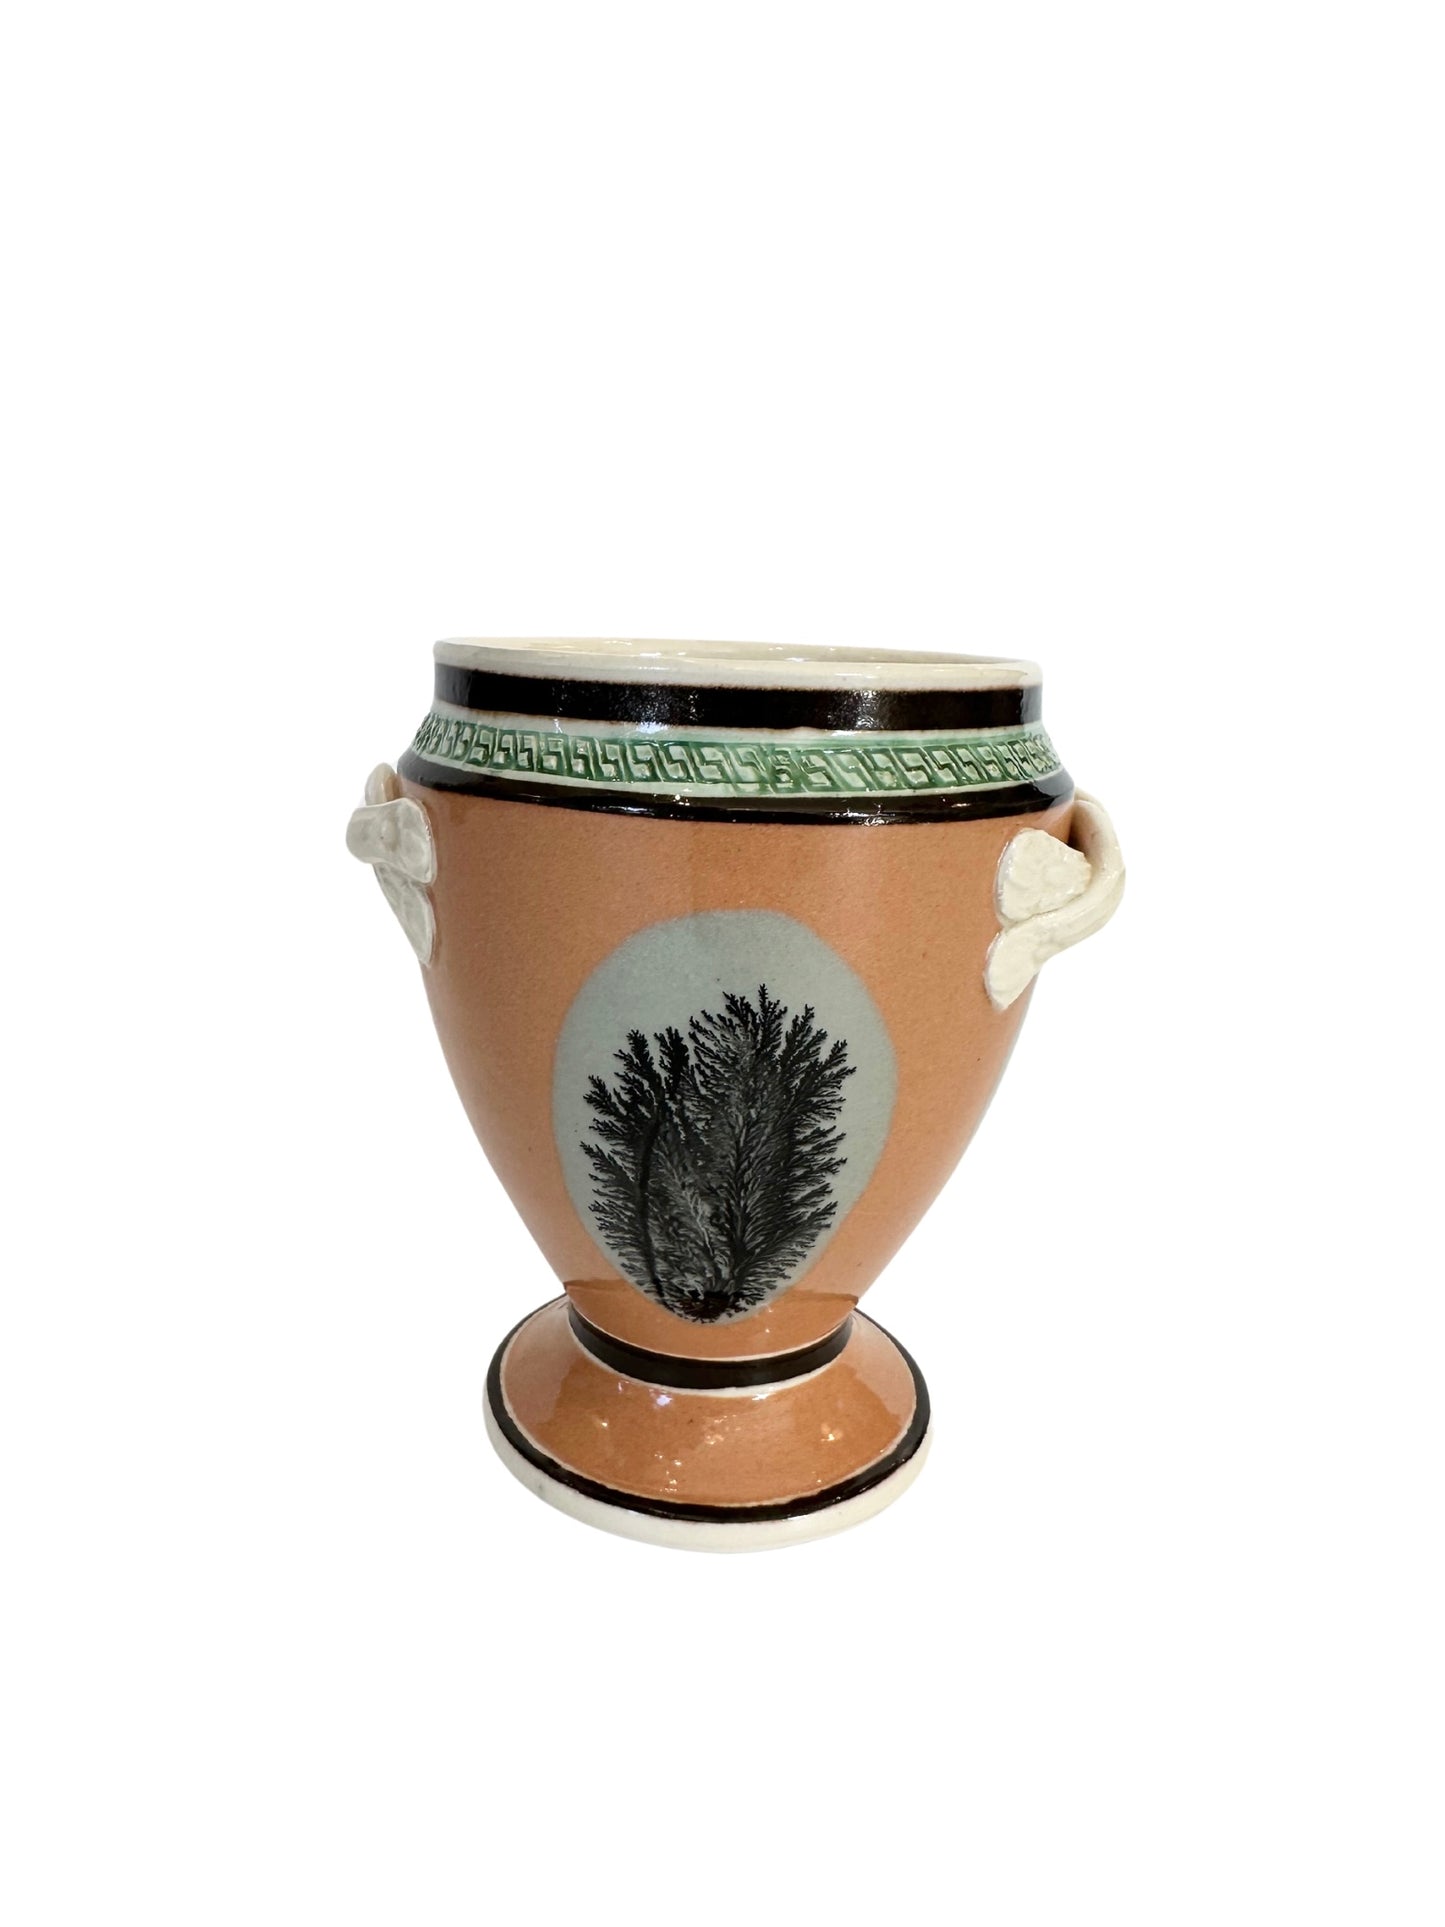 Mochaware Urn Vase